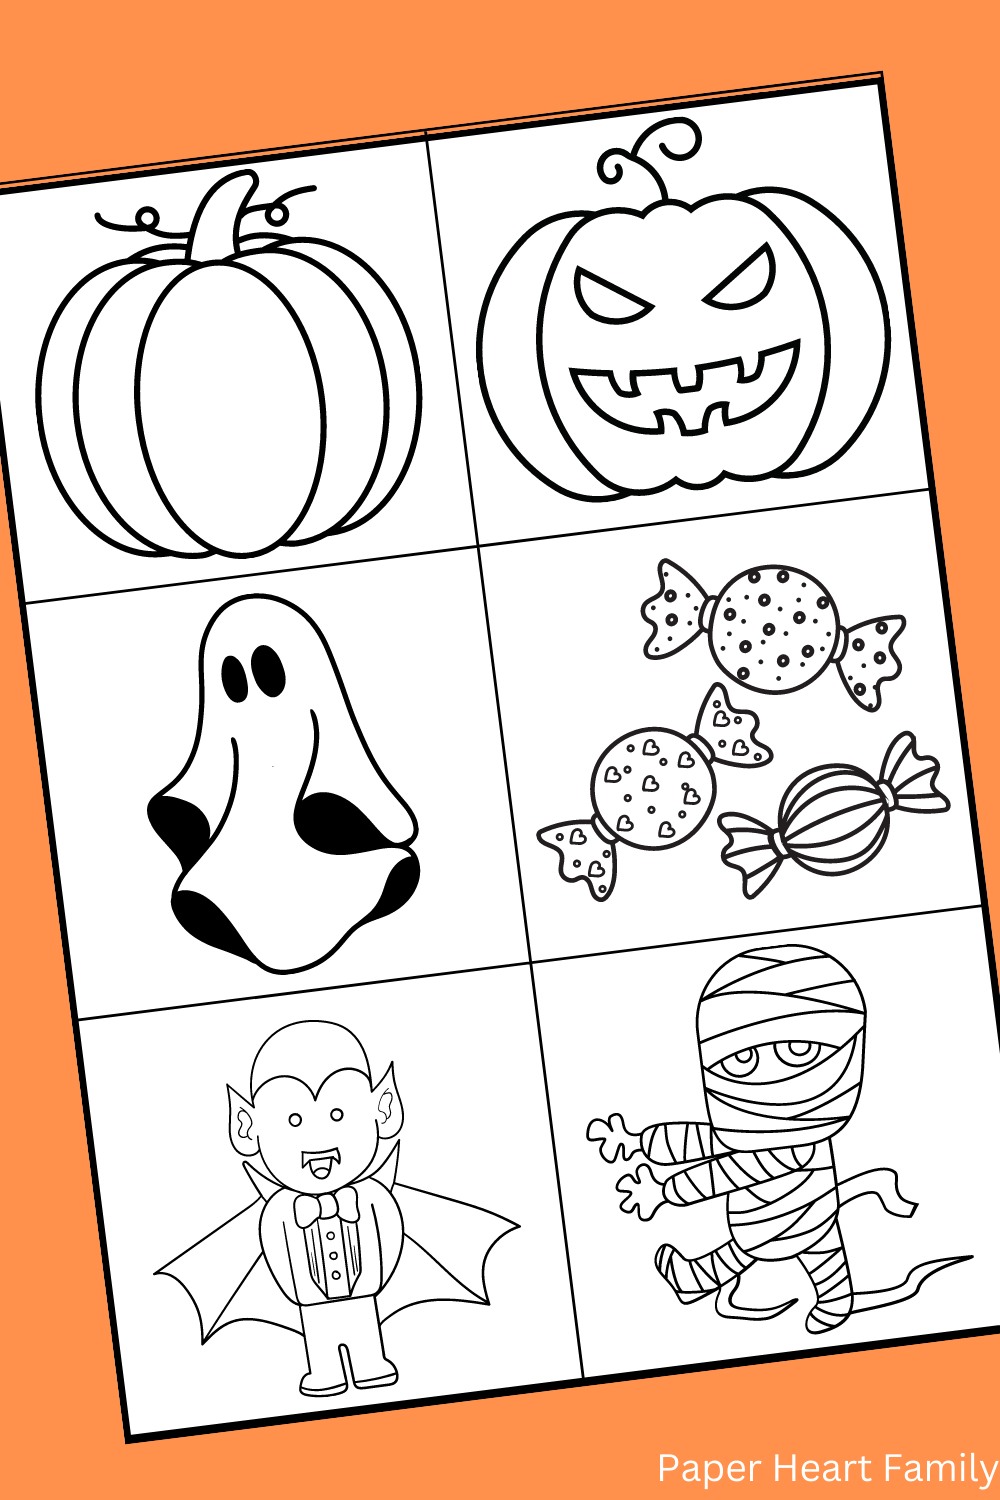 Kid's Halloween Drawing Prompts